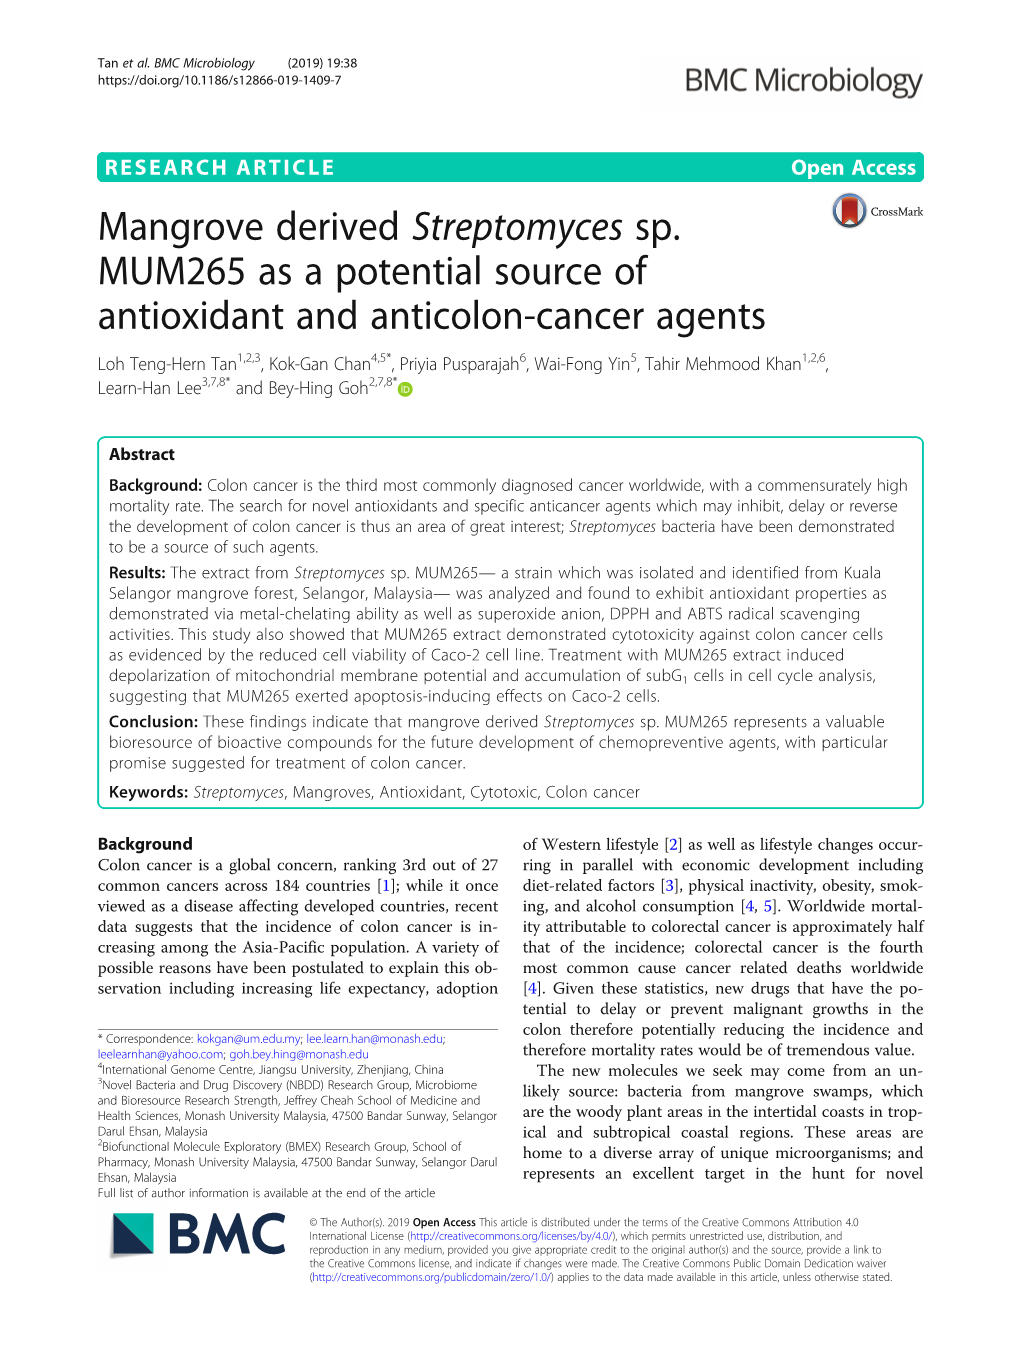 Mangrove Derived Streptomyces Sp. MUM265 As a Potential Source Of